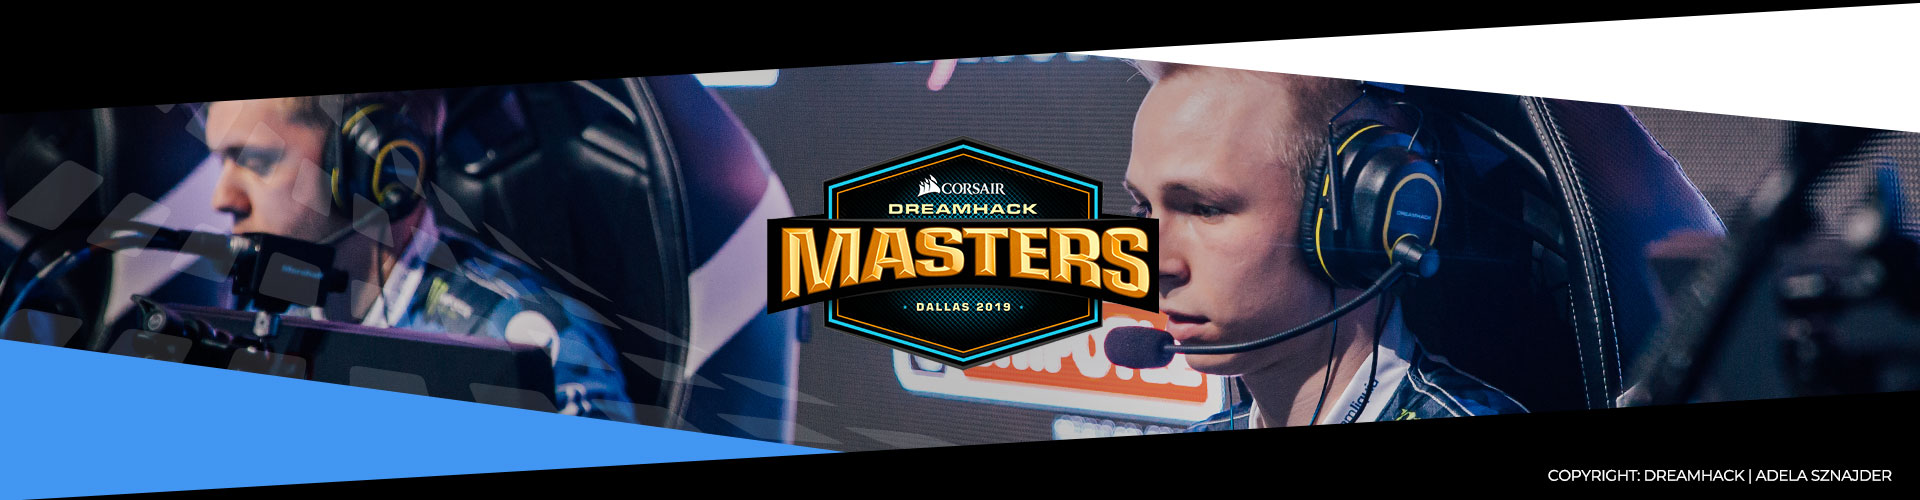 Dreamhack Masters Dallas 1. päivän yhteenveto